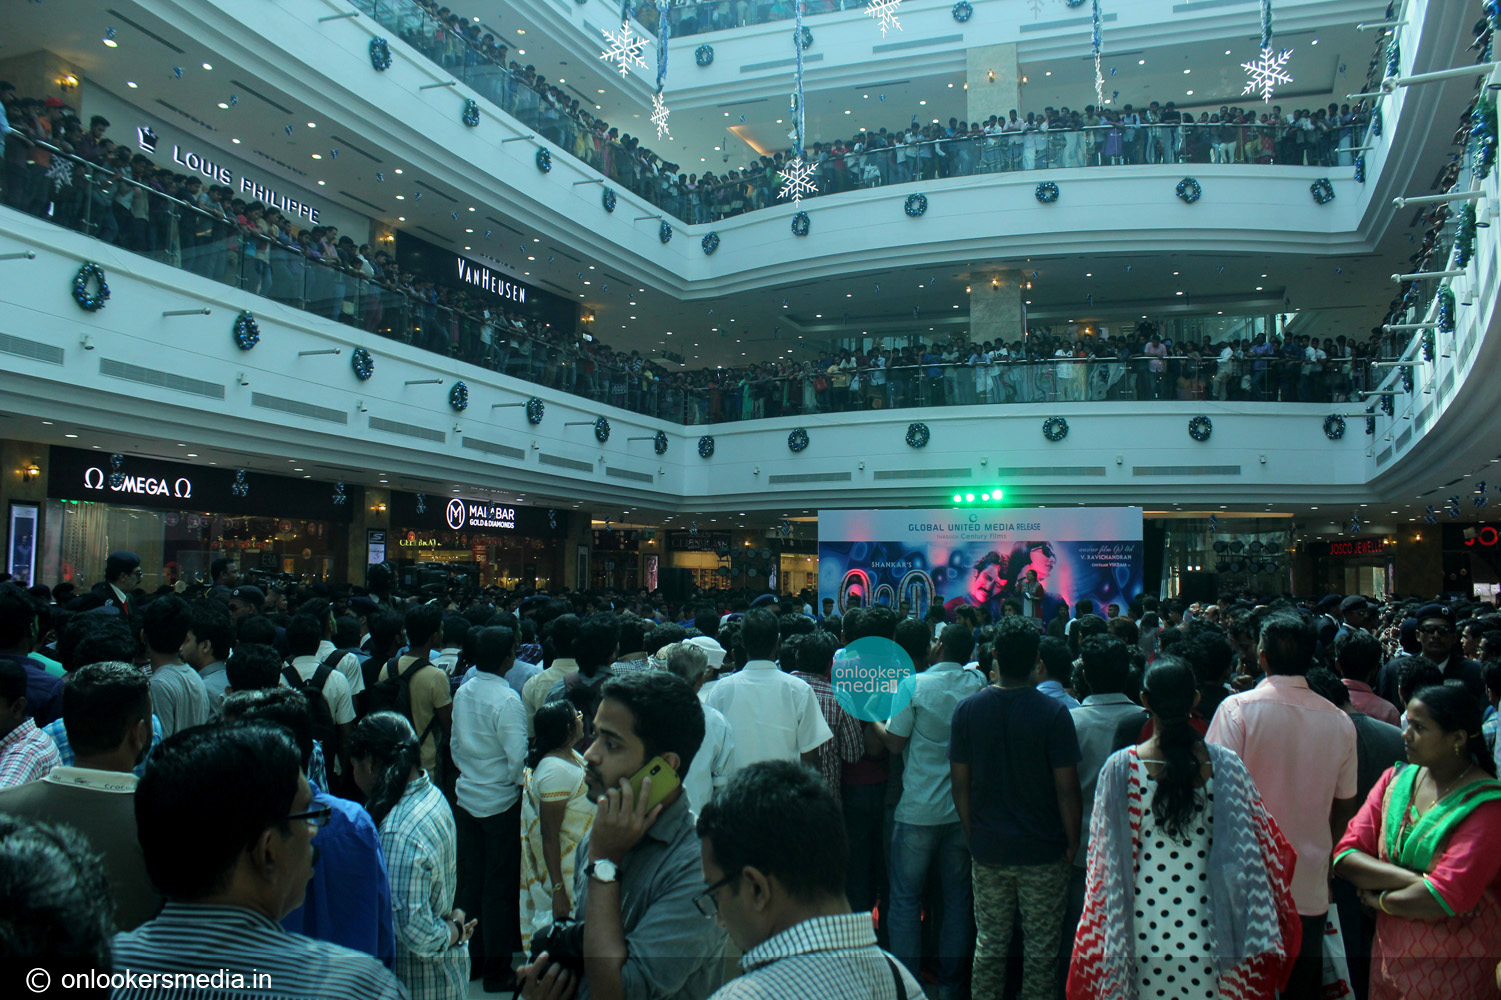 https://onlookersmedia.in/wp-content/uploads/2015/01/I-promotional-function-at-Lulu-mall-Kerala-Vikram-Amy-Jackson-Onlookers-Media-19.jpg